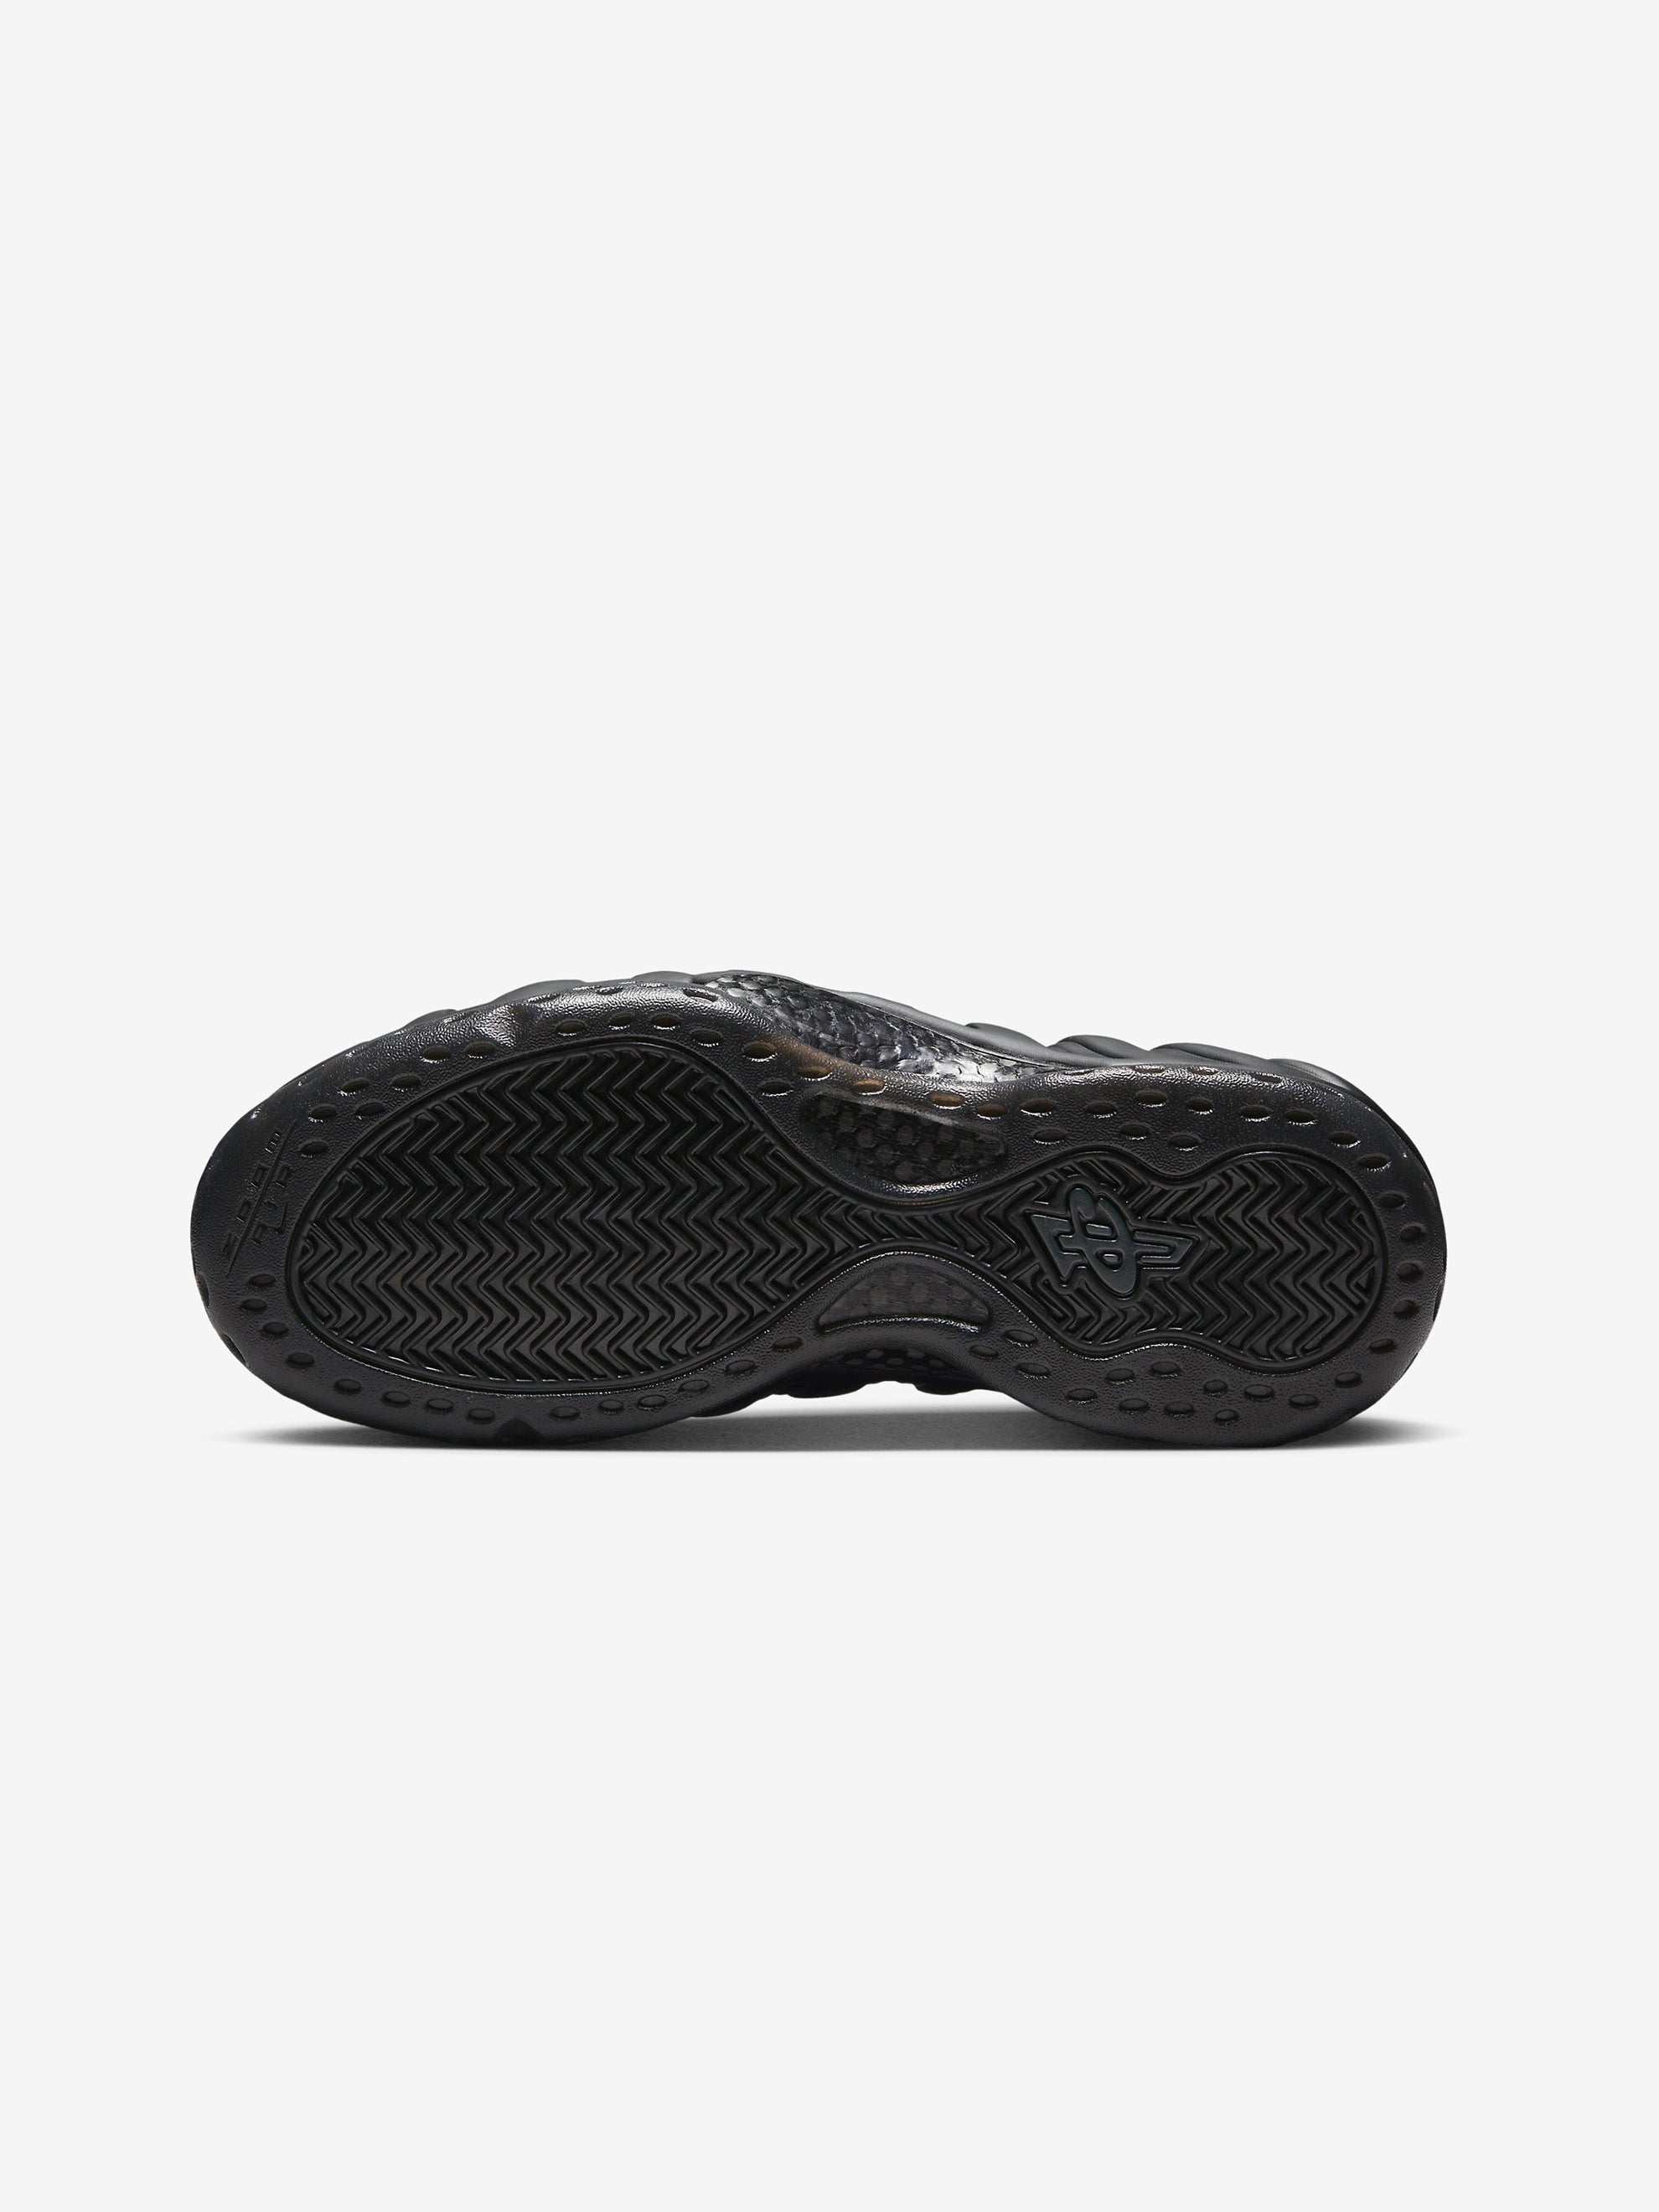 Nike Air Foamposite One (Black/Anthracite-Black-Black)